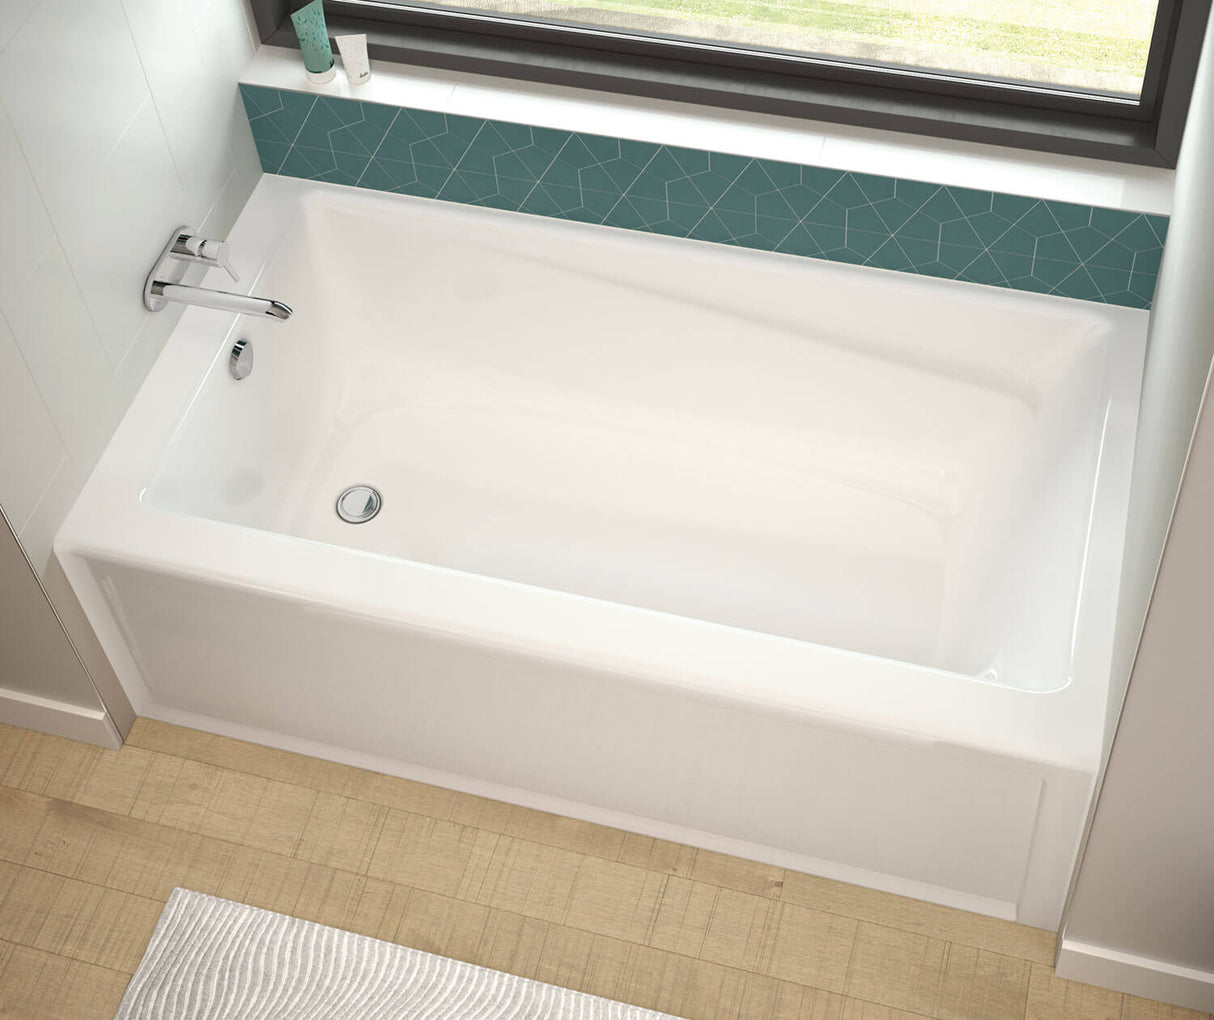 MAAX 106179-R-097-001 Exhibit 6636 IFS Acrylic Alcove Right-Hand Drain Combined Whirlpool & Aeroeffect Bathtub in White